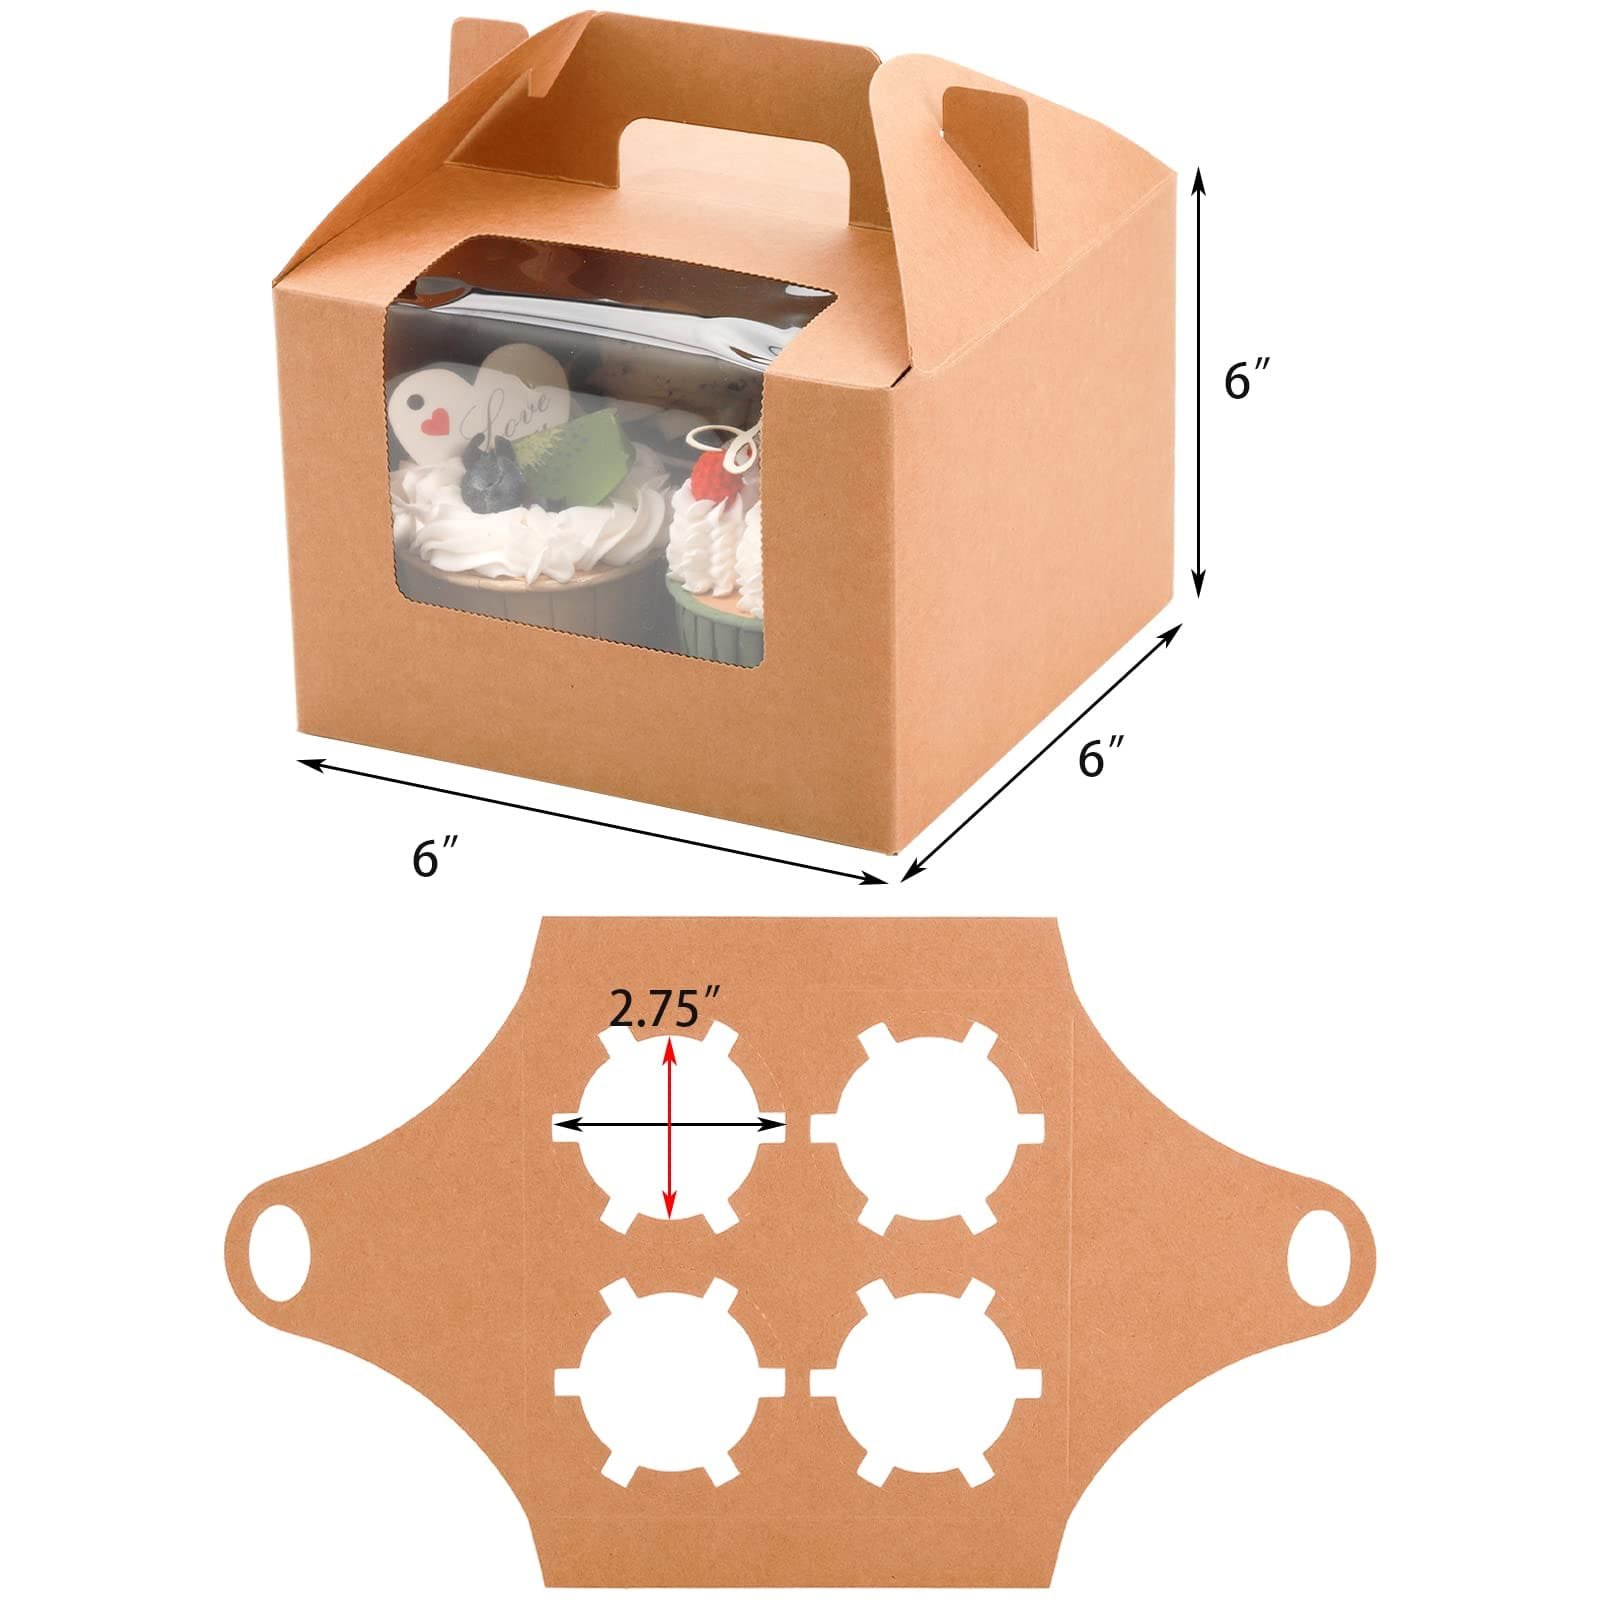 Paper Cake Box Easy | Cake Gift Box Ideas | Paper Cake Tutorial /how tu  make paper cake /paper craft - YouTube